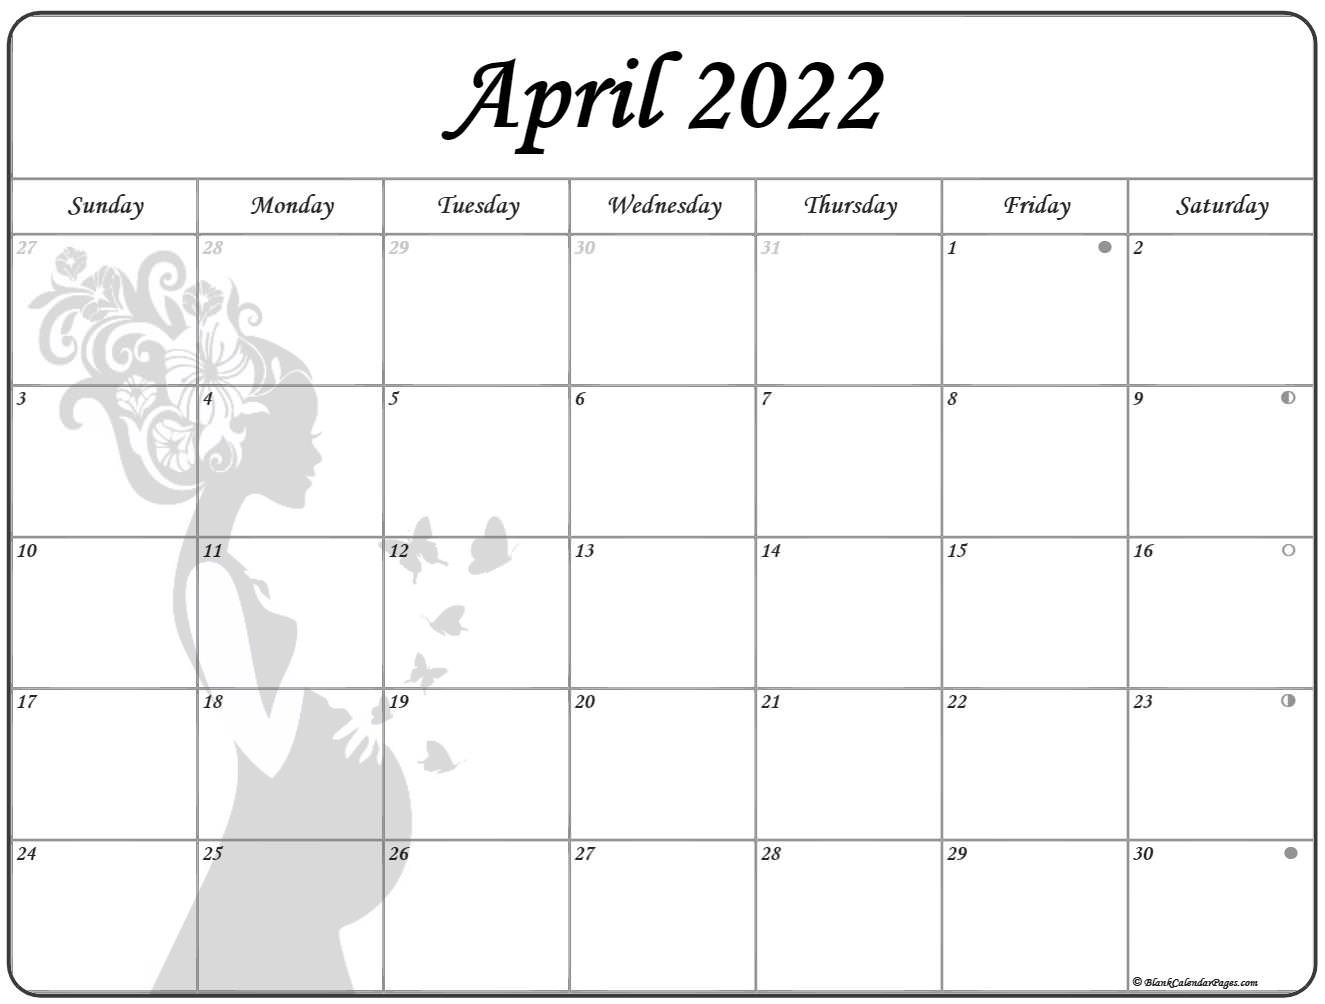 April 2022 Pregnancy Calendar | Fertility Calendar